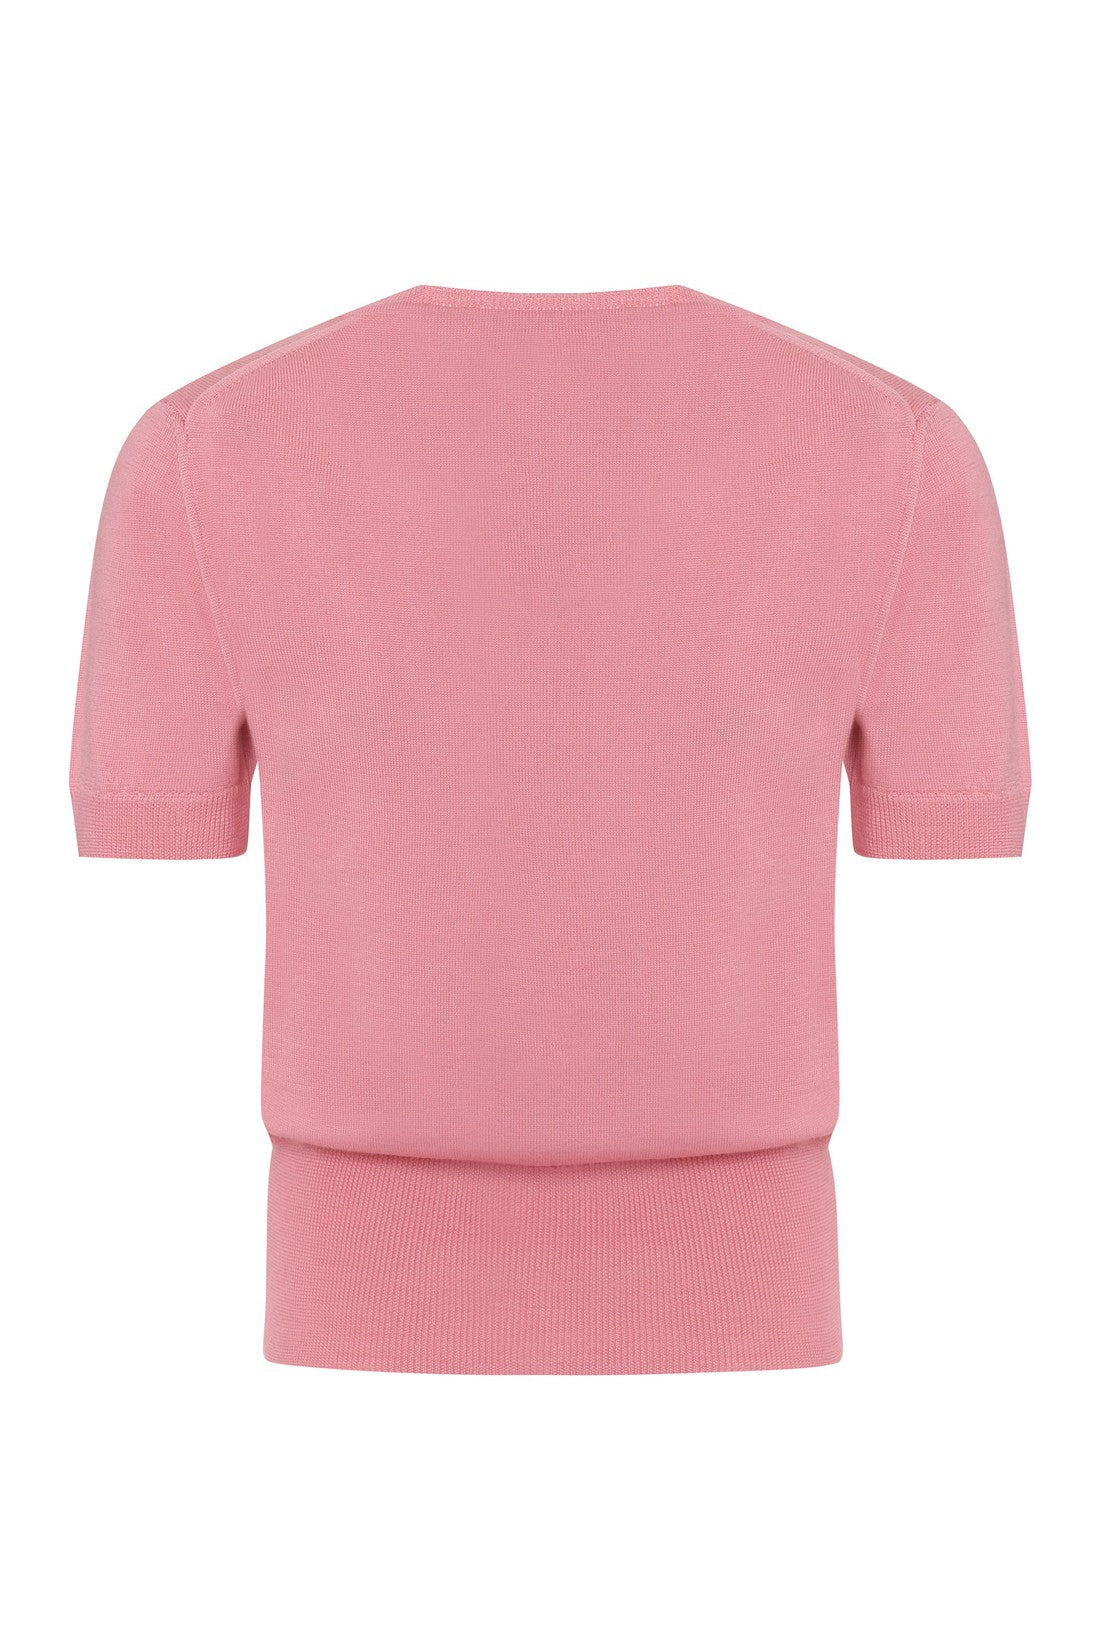 Vivienne Westwood-OUTLET-SALE-Bea logo knitted t-shirt-ARCHIVIST